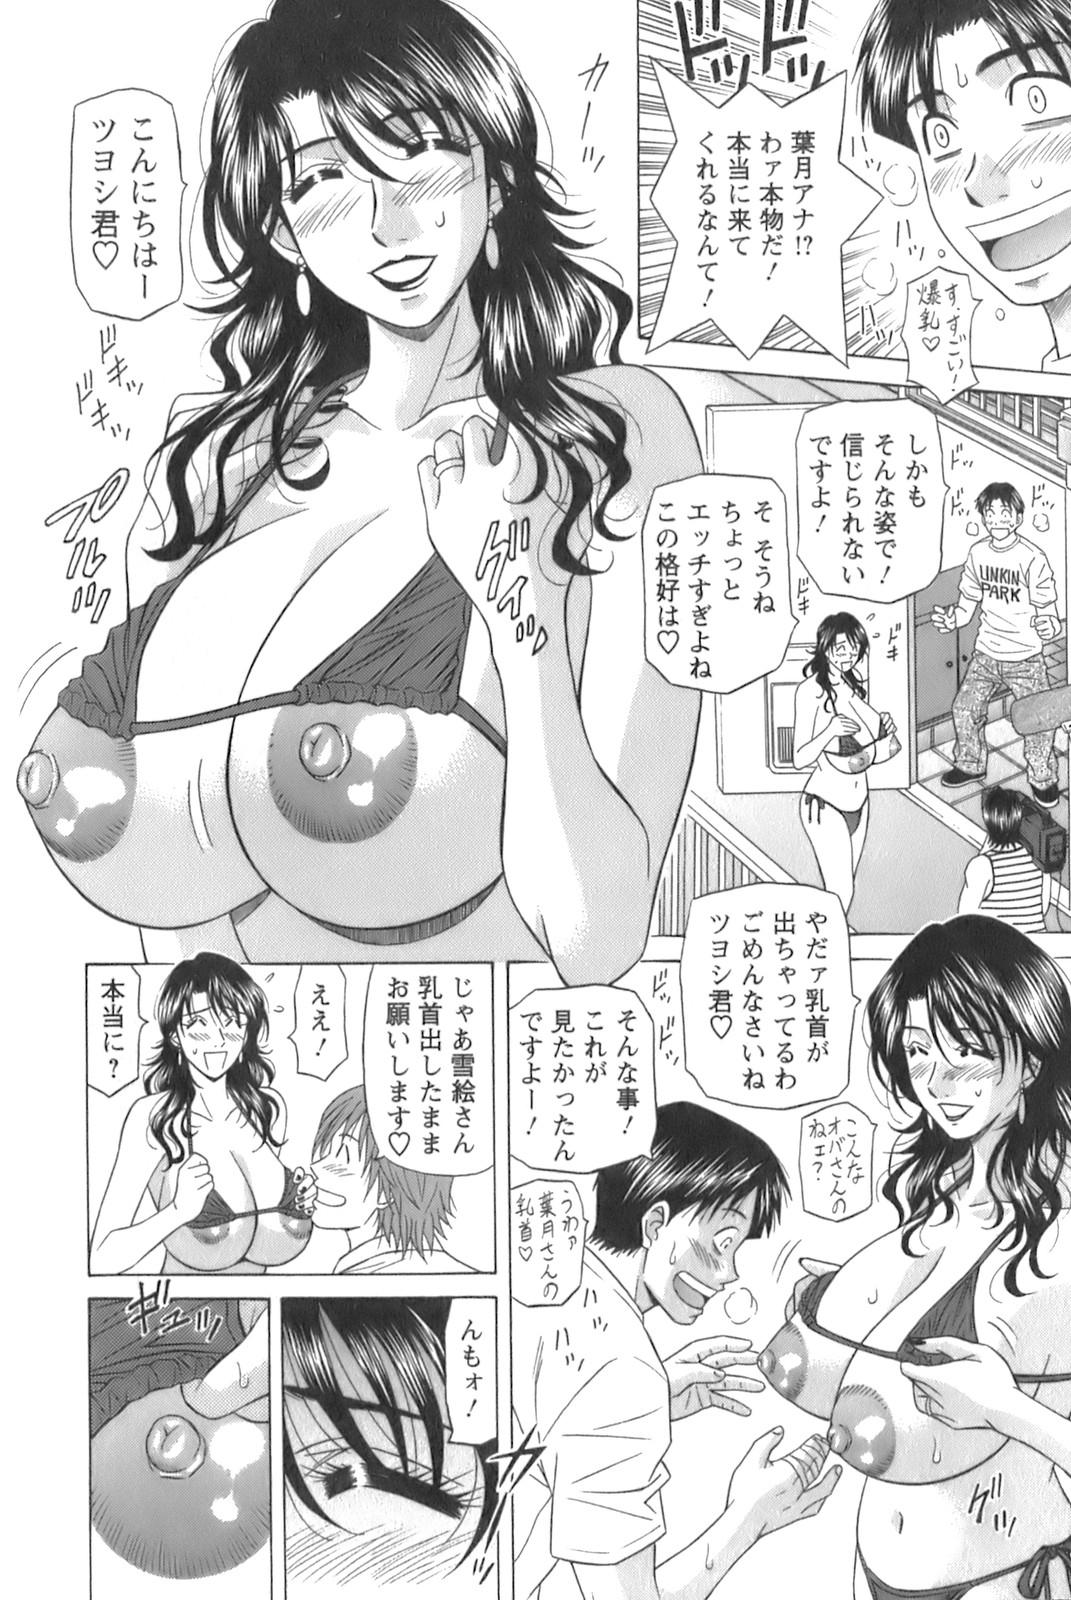 Dear Shitamachi Princess Vol. 1 51